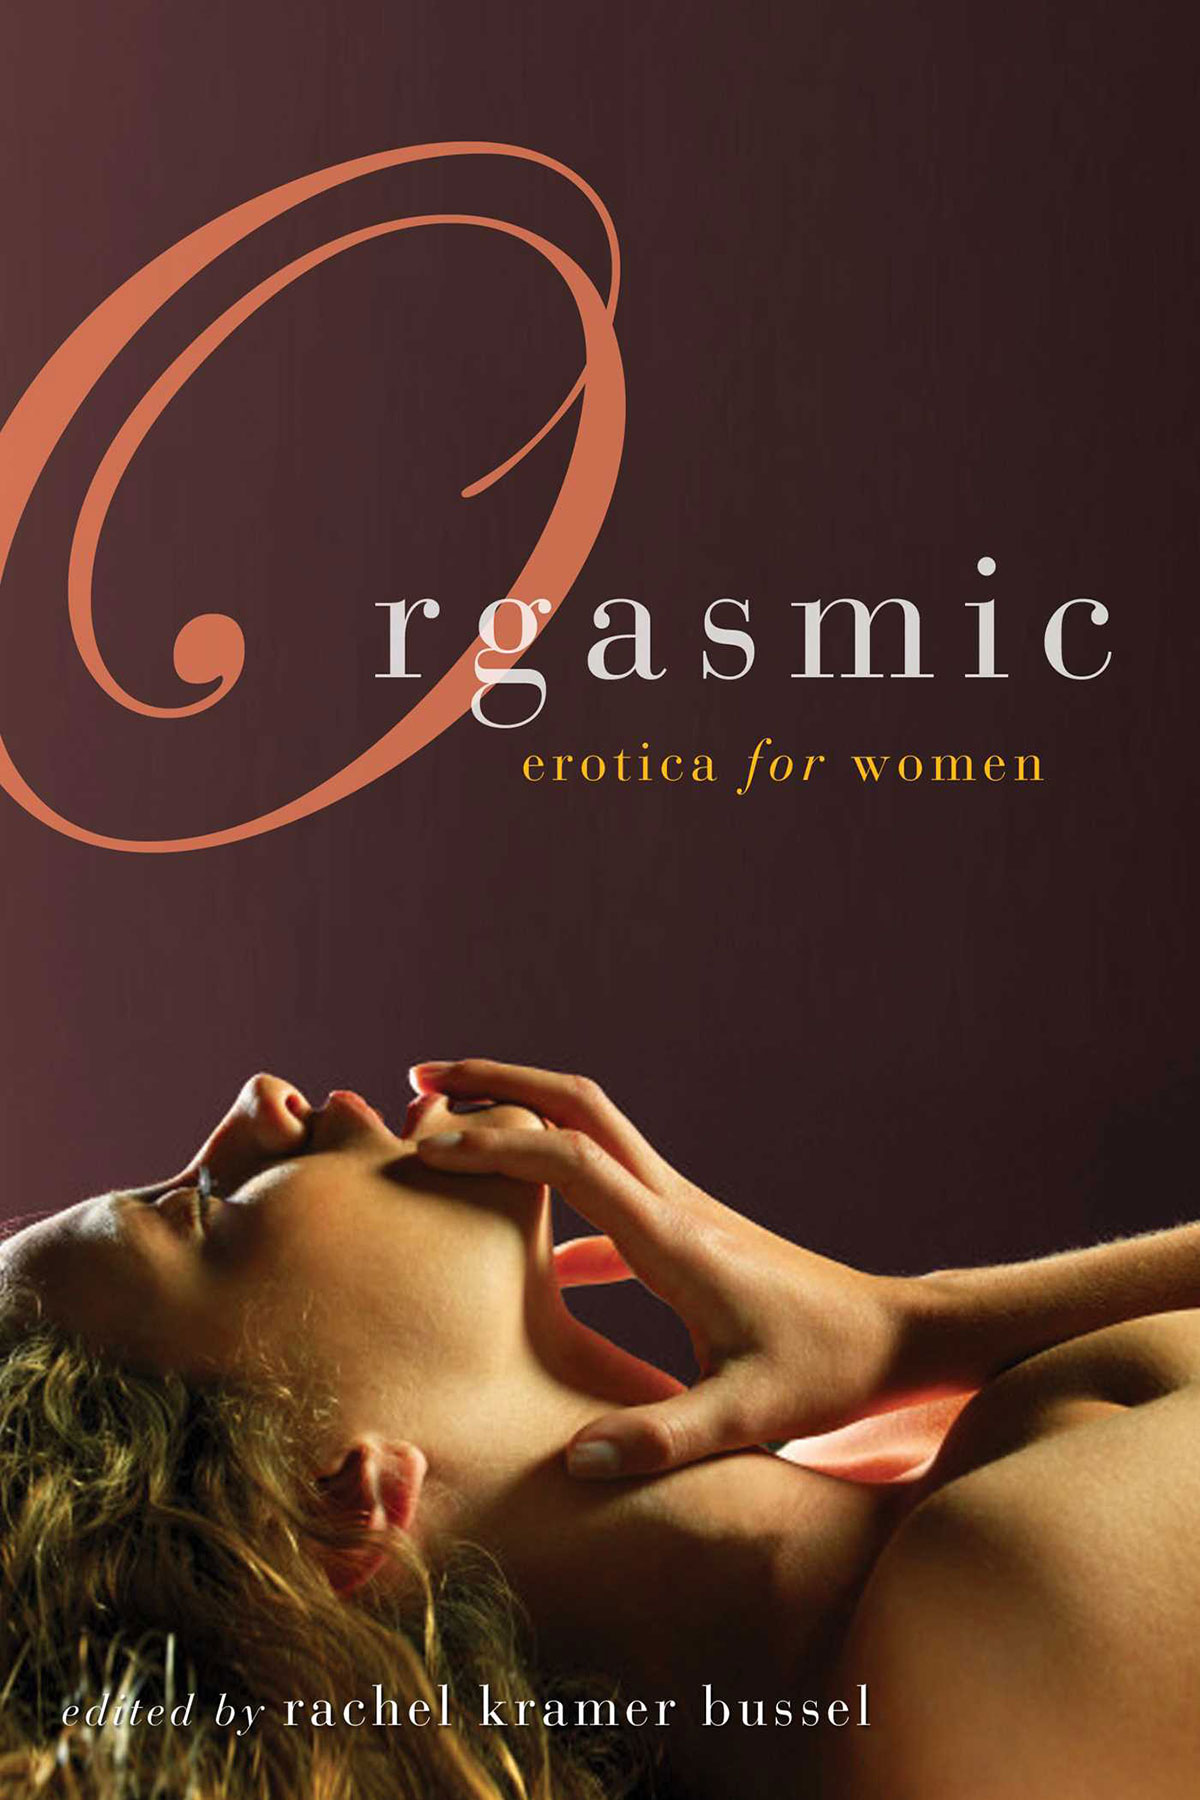 Orgasmic: Erotica for Women by Rachel Kramer Bussel (Editor)